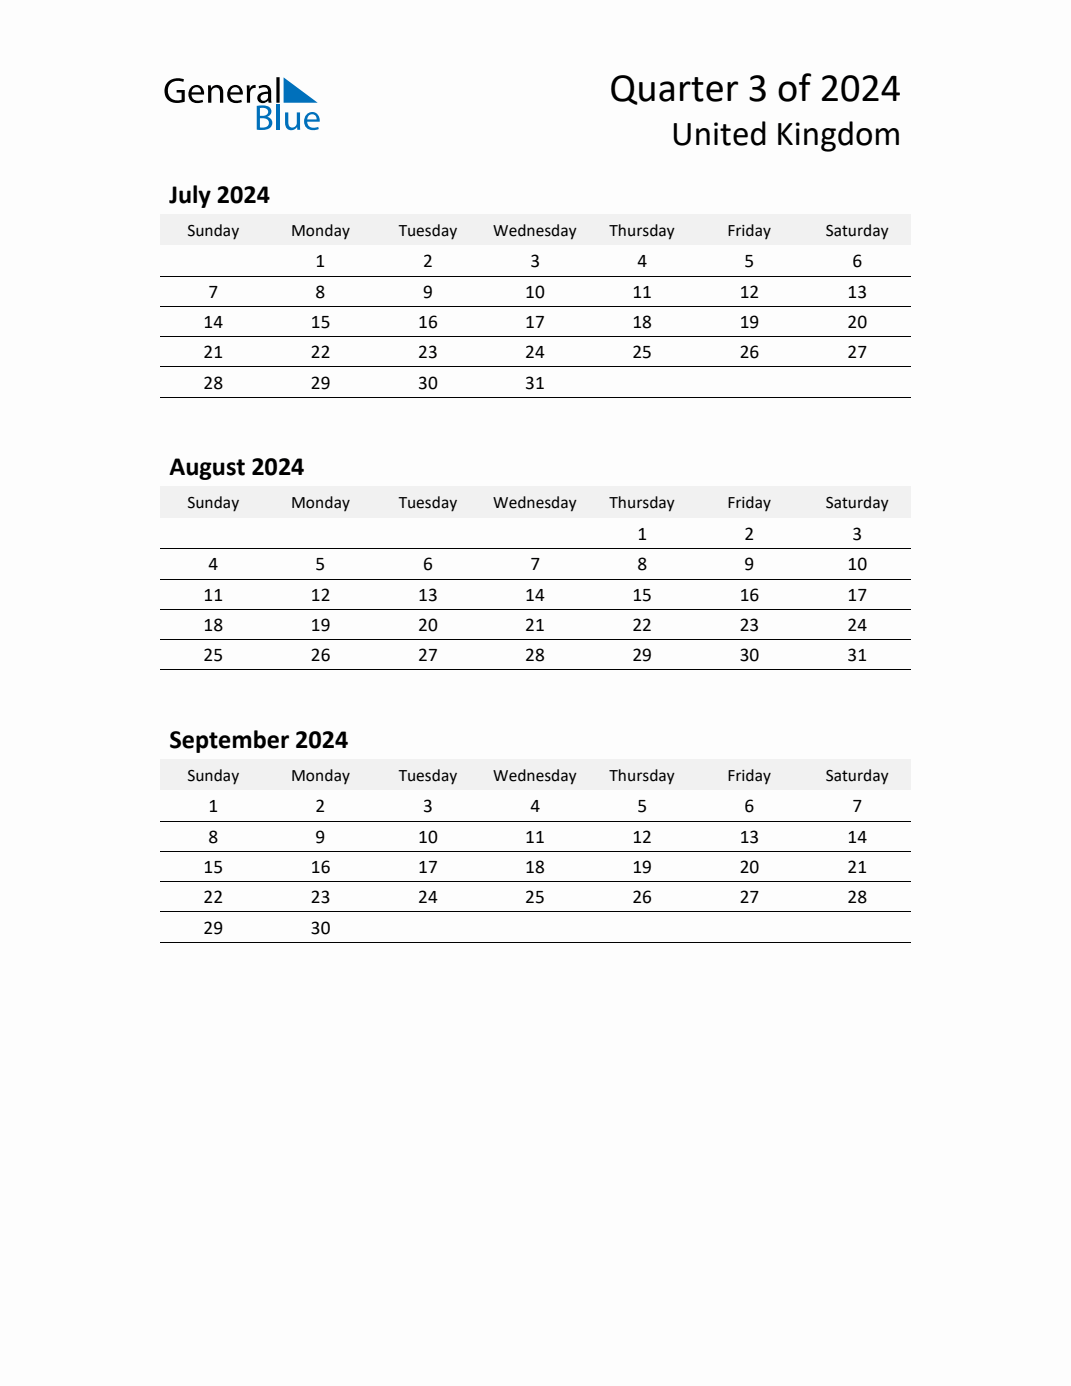 Q3 2024 Quarterly Calendar with United Kingdom Holidays